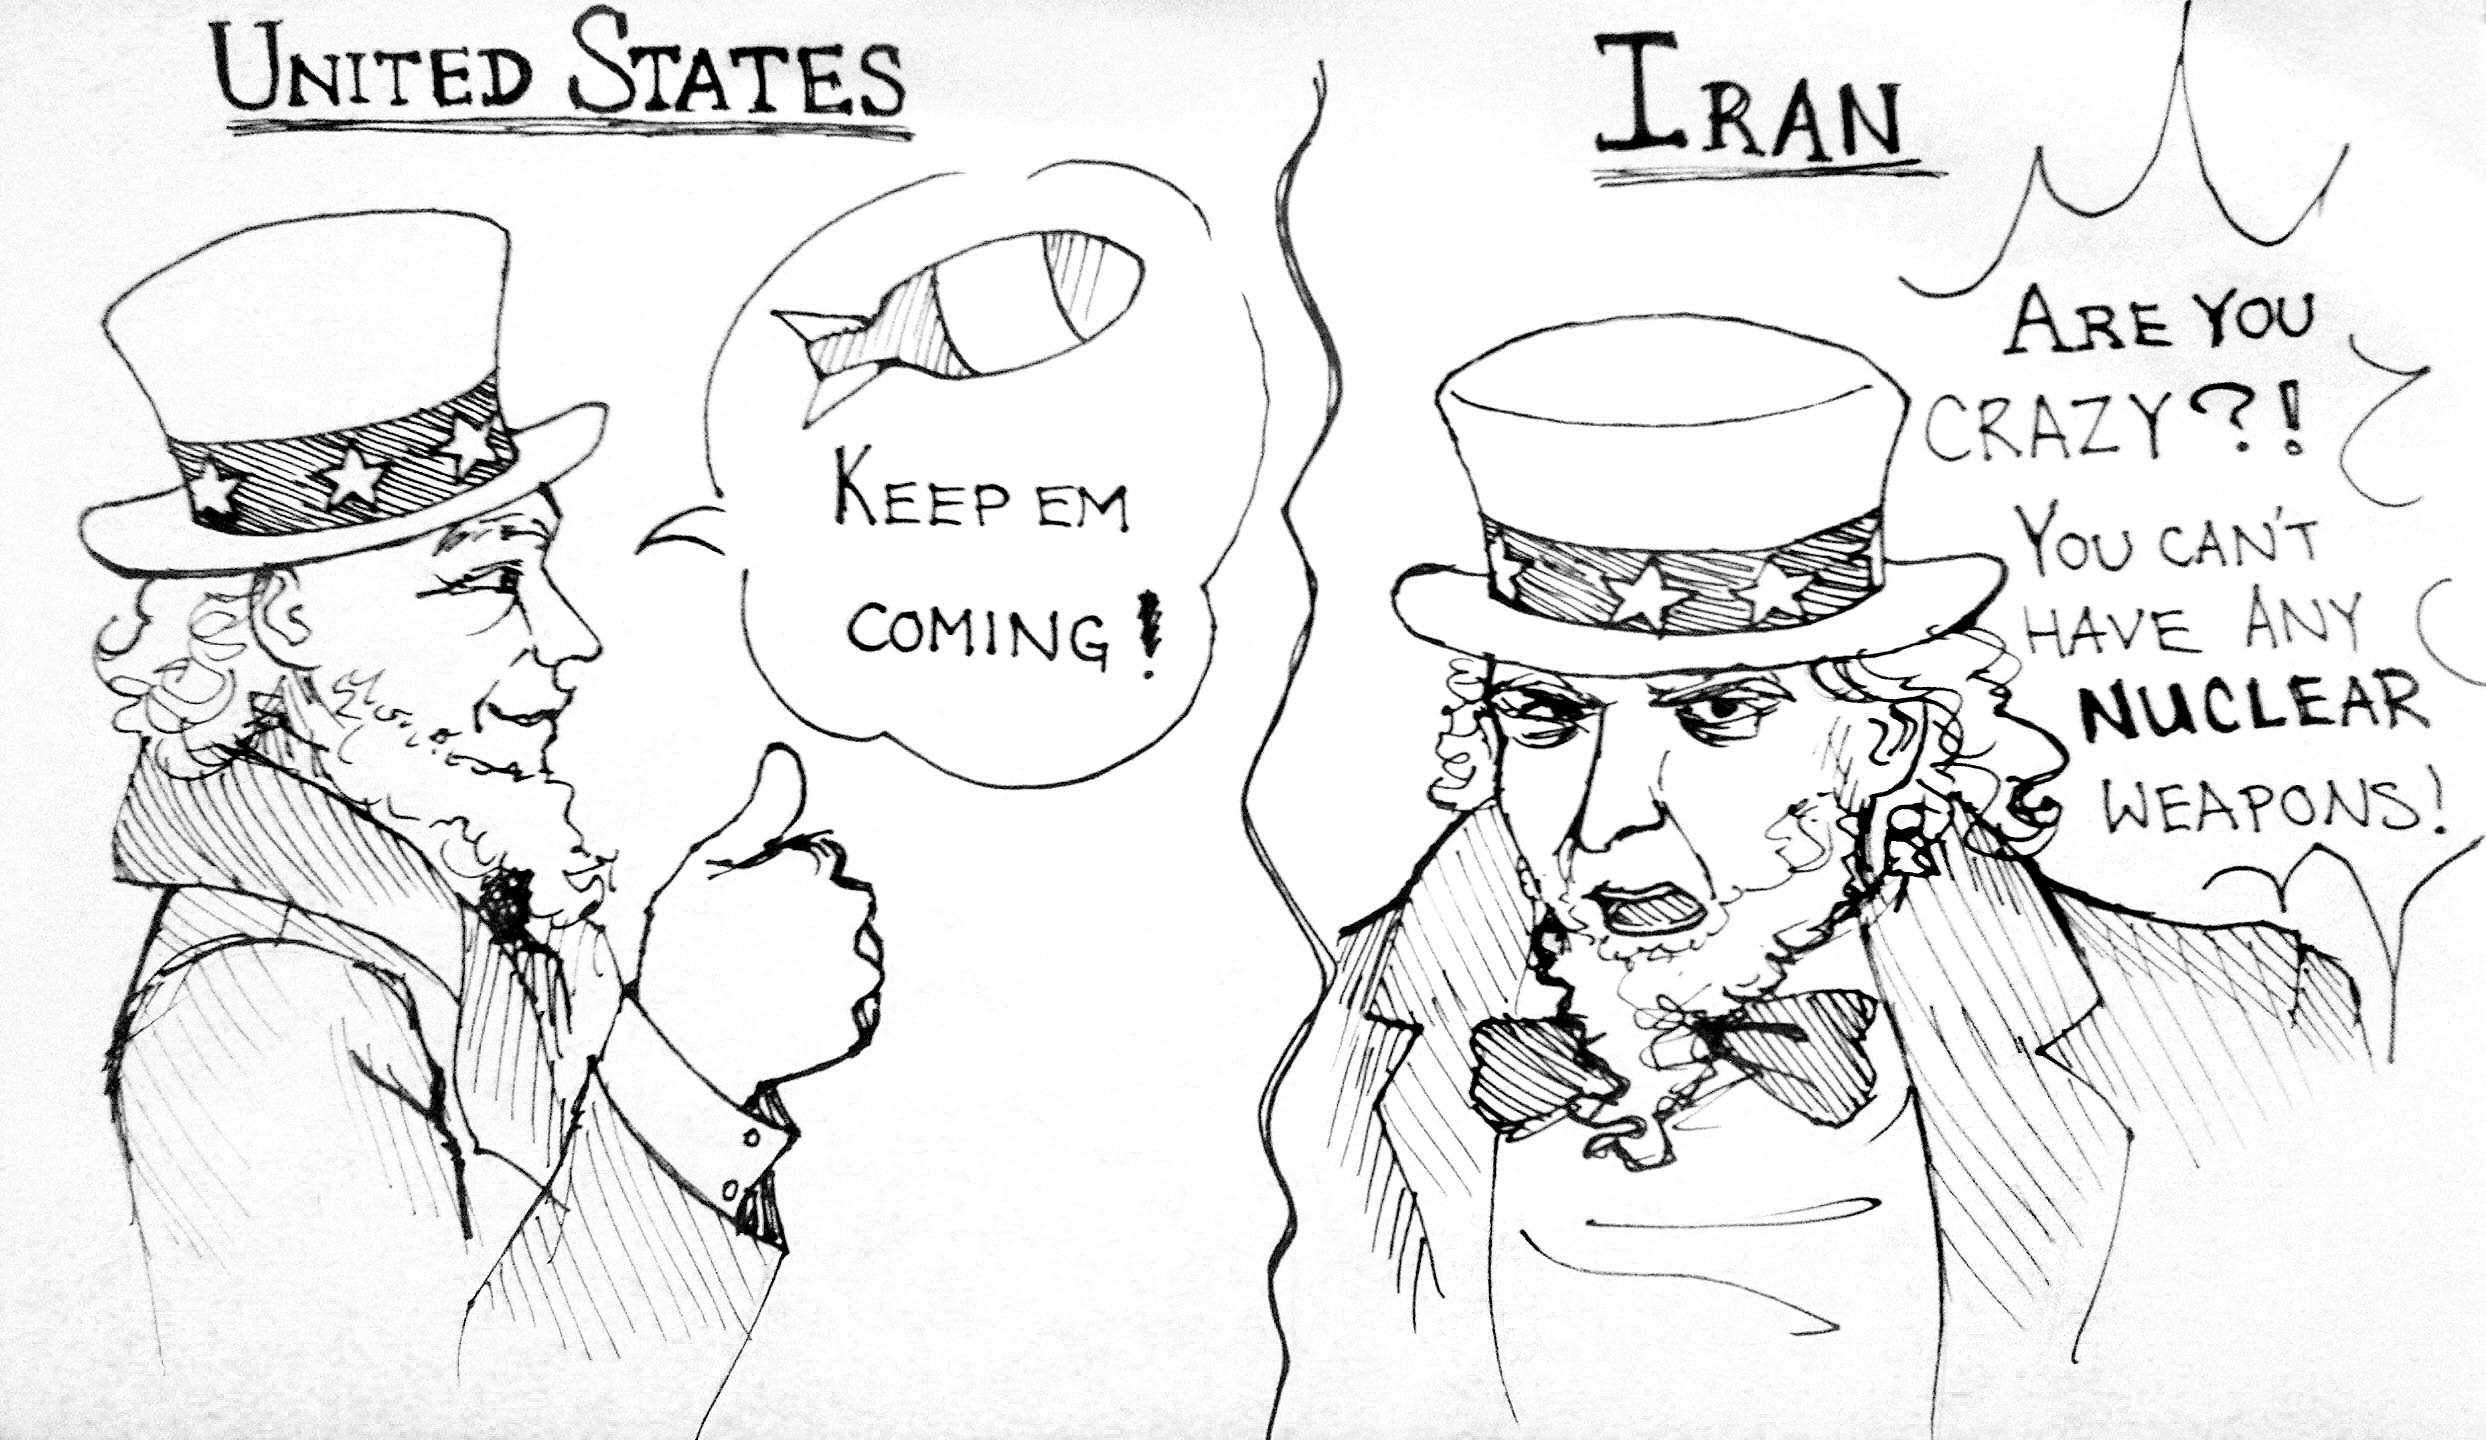 Iranian Proliferation: Much Ado About Nothing